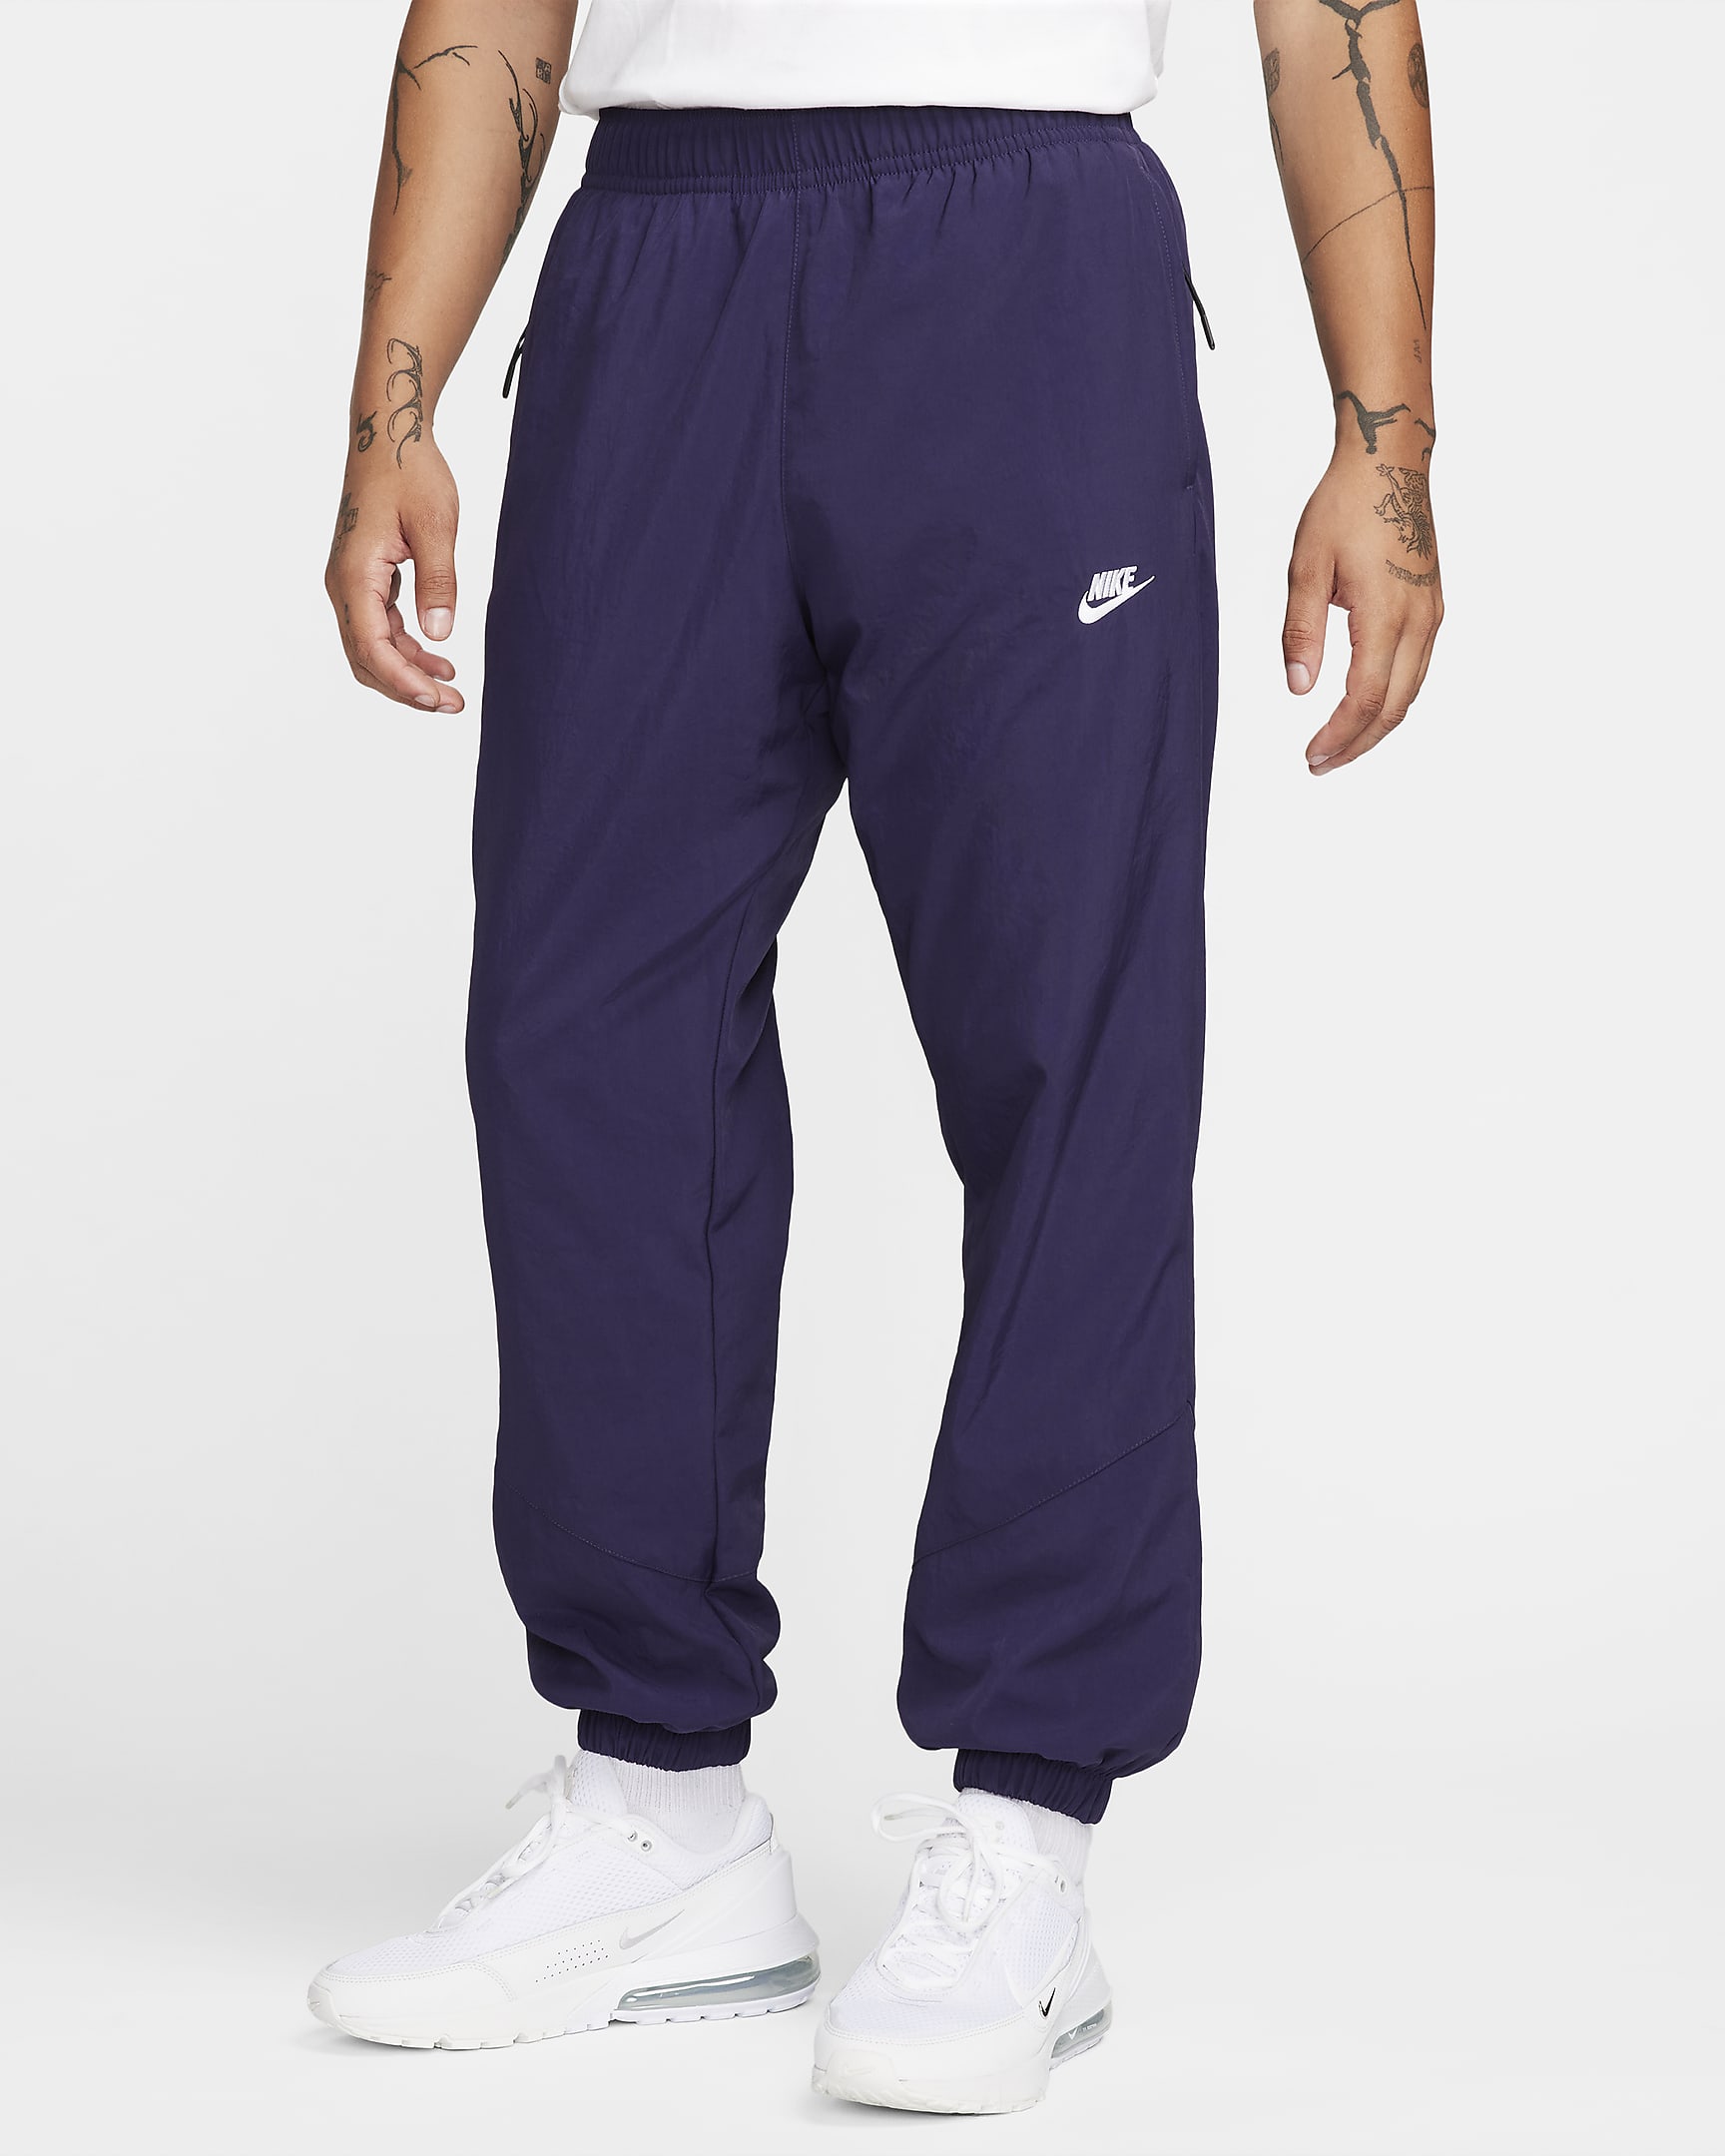 Pantalon d‘hiver tissé Nike Windrunner pour homme - Purple Ink/Blanc